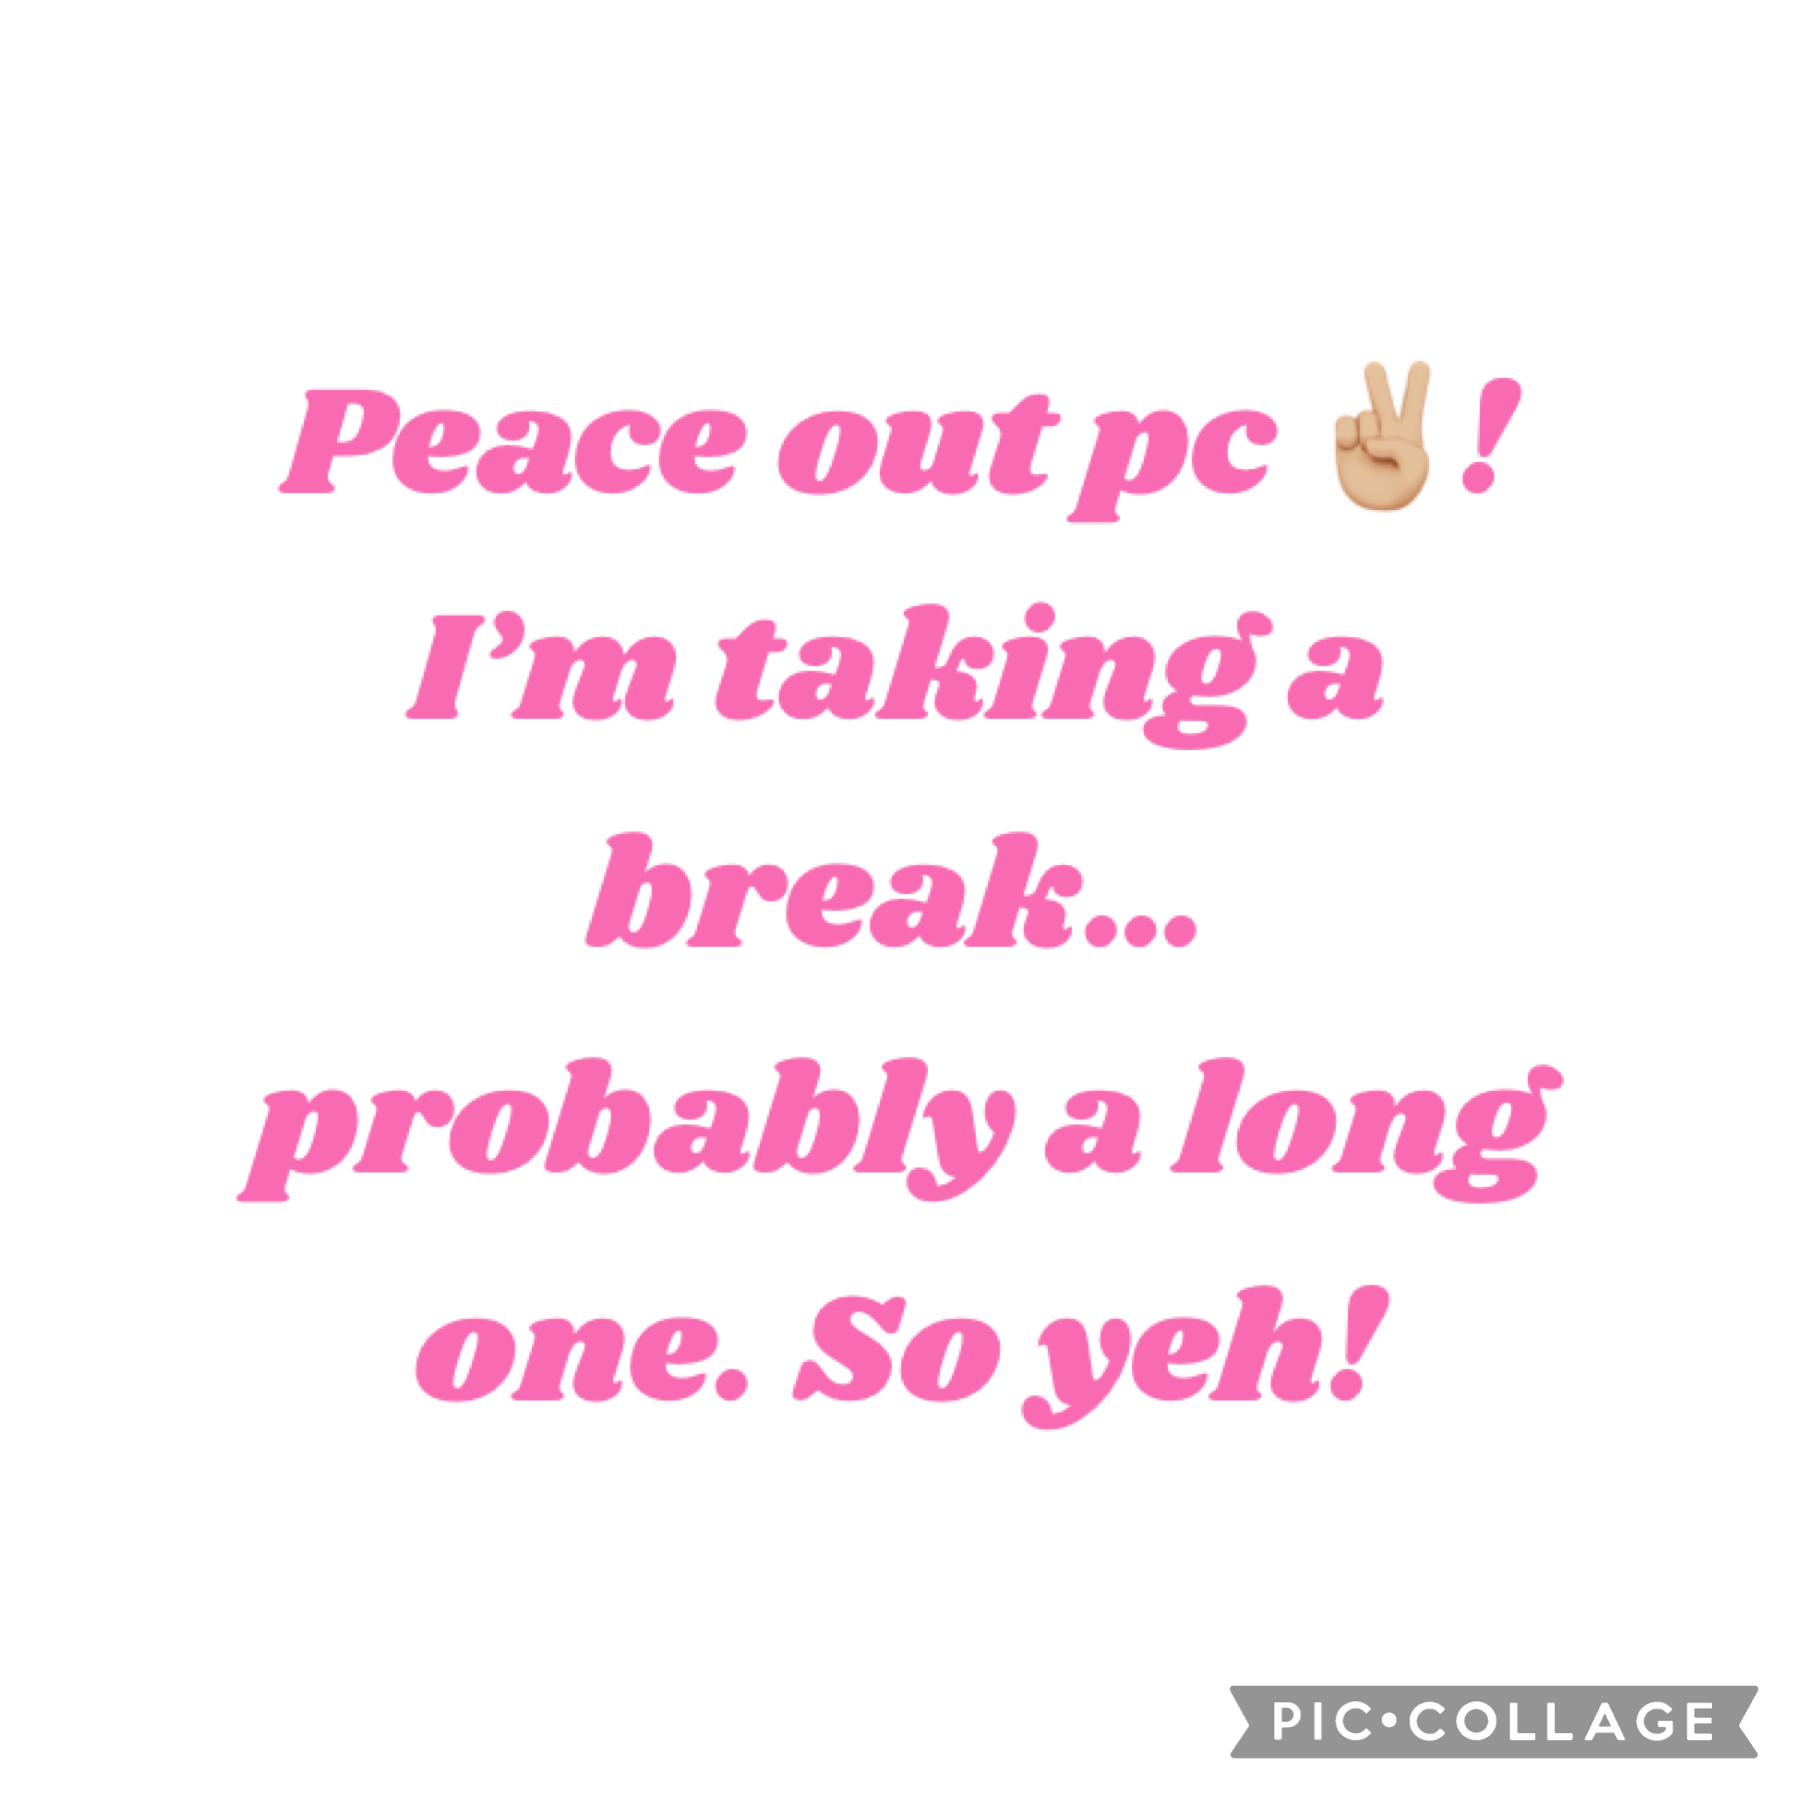 ✌🏼Tap✌🏼
Taking a break! I’ll miss y’all! Love you petals! 
Stay positive xoxo, 
Pink-Petals